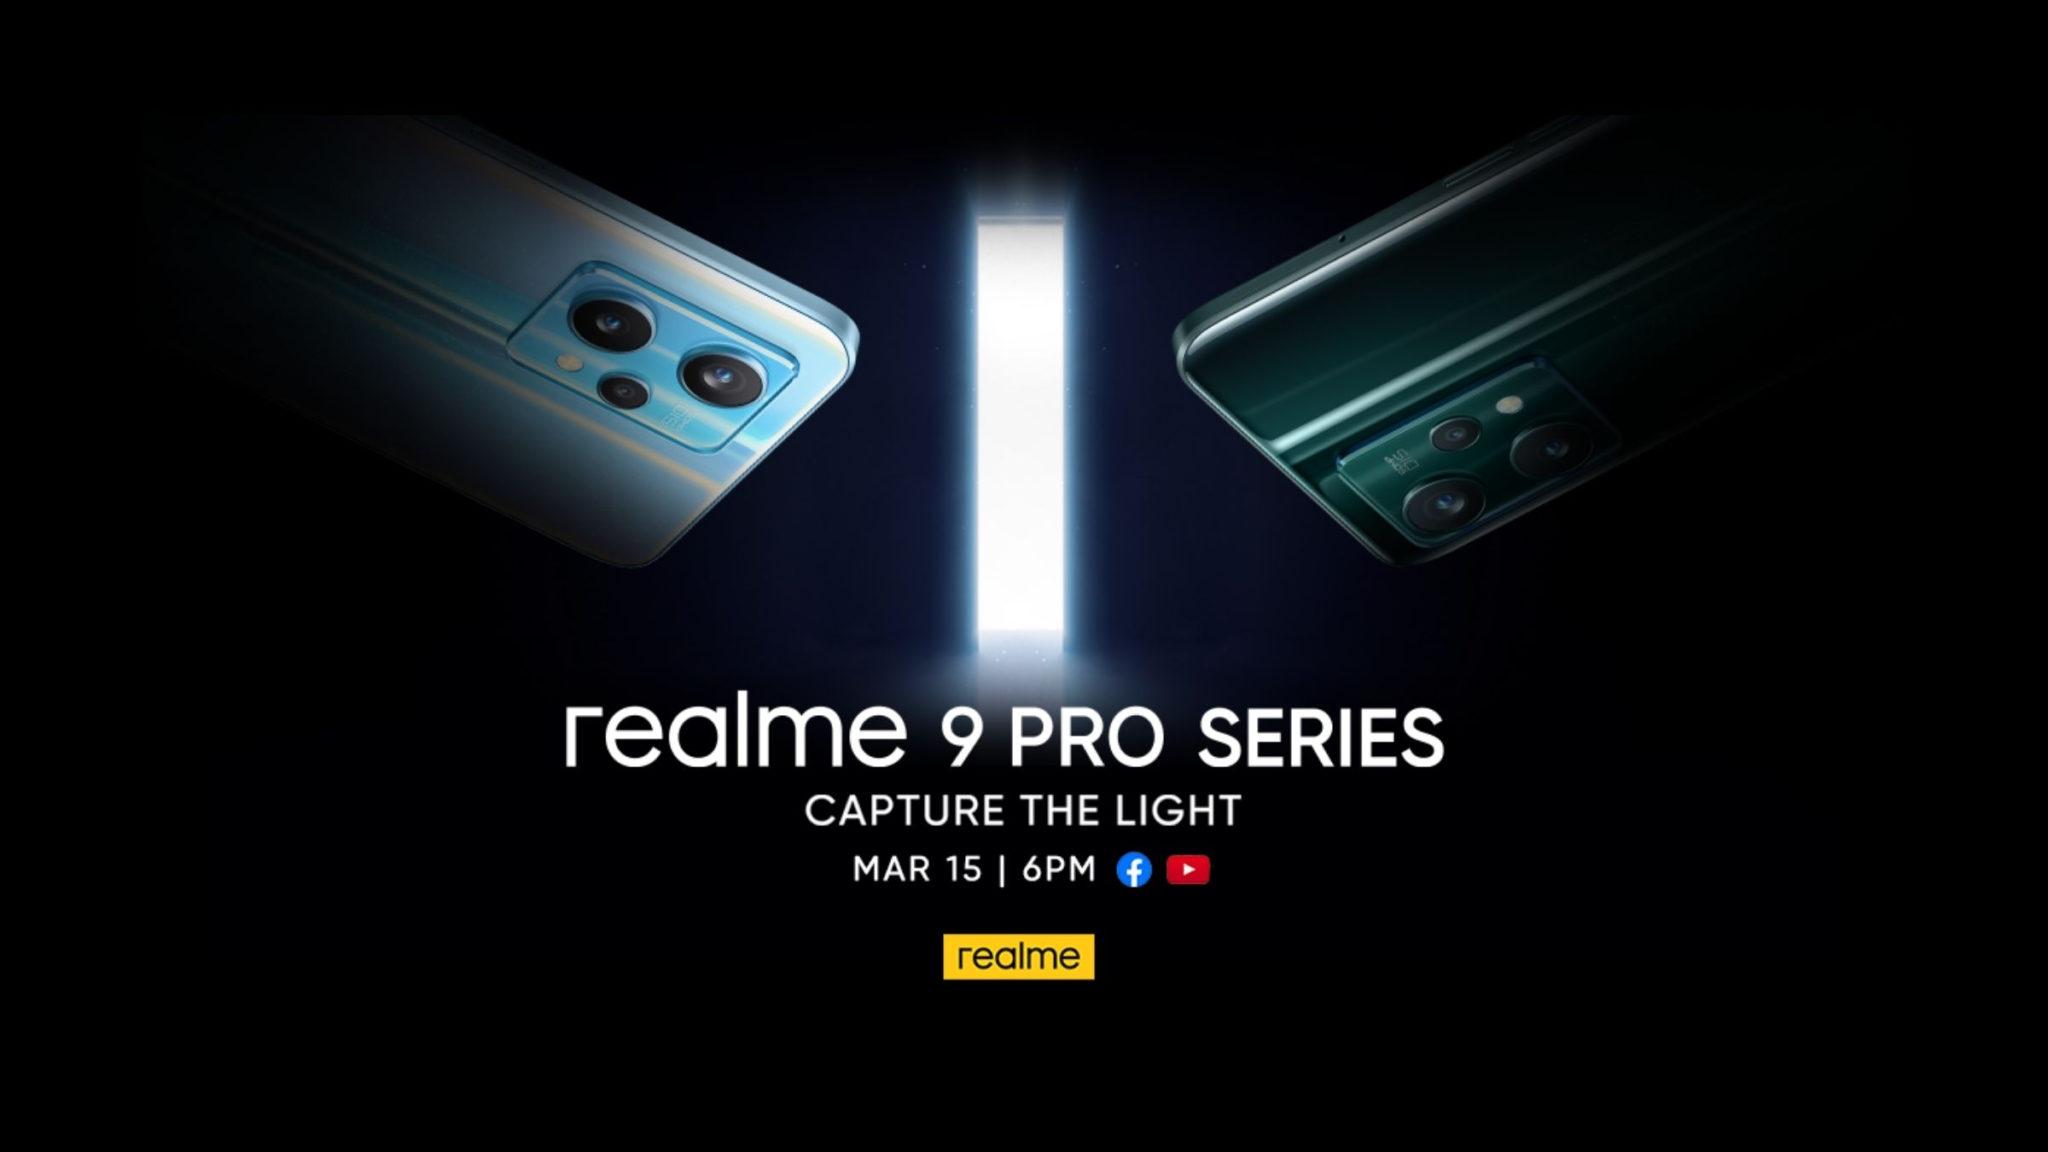 realme 9 Pro Series PH Launch Header